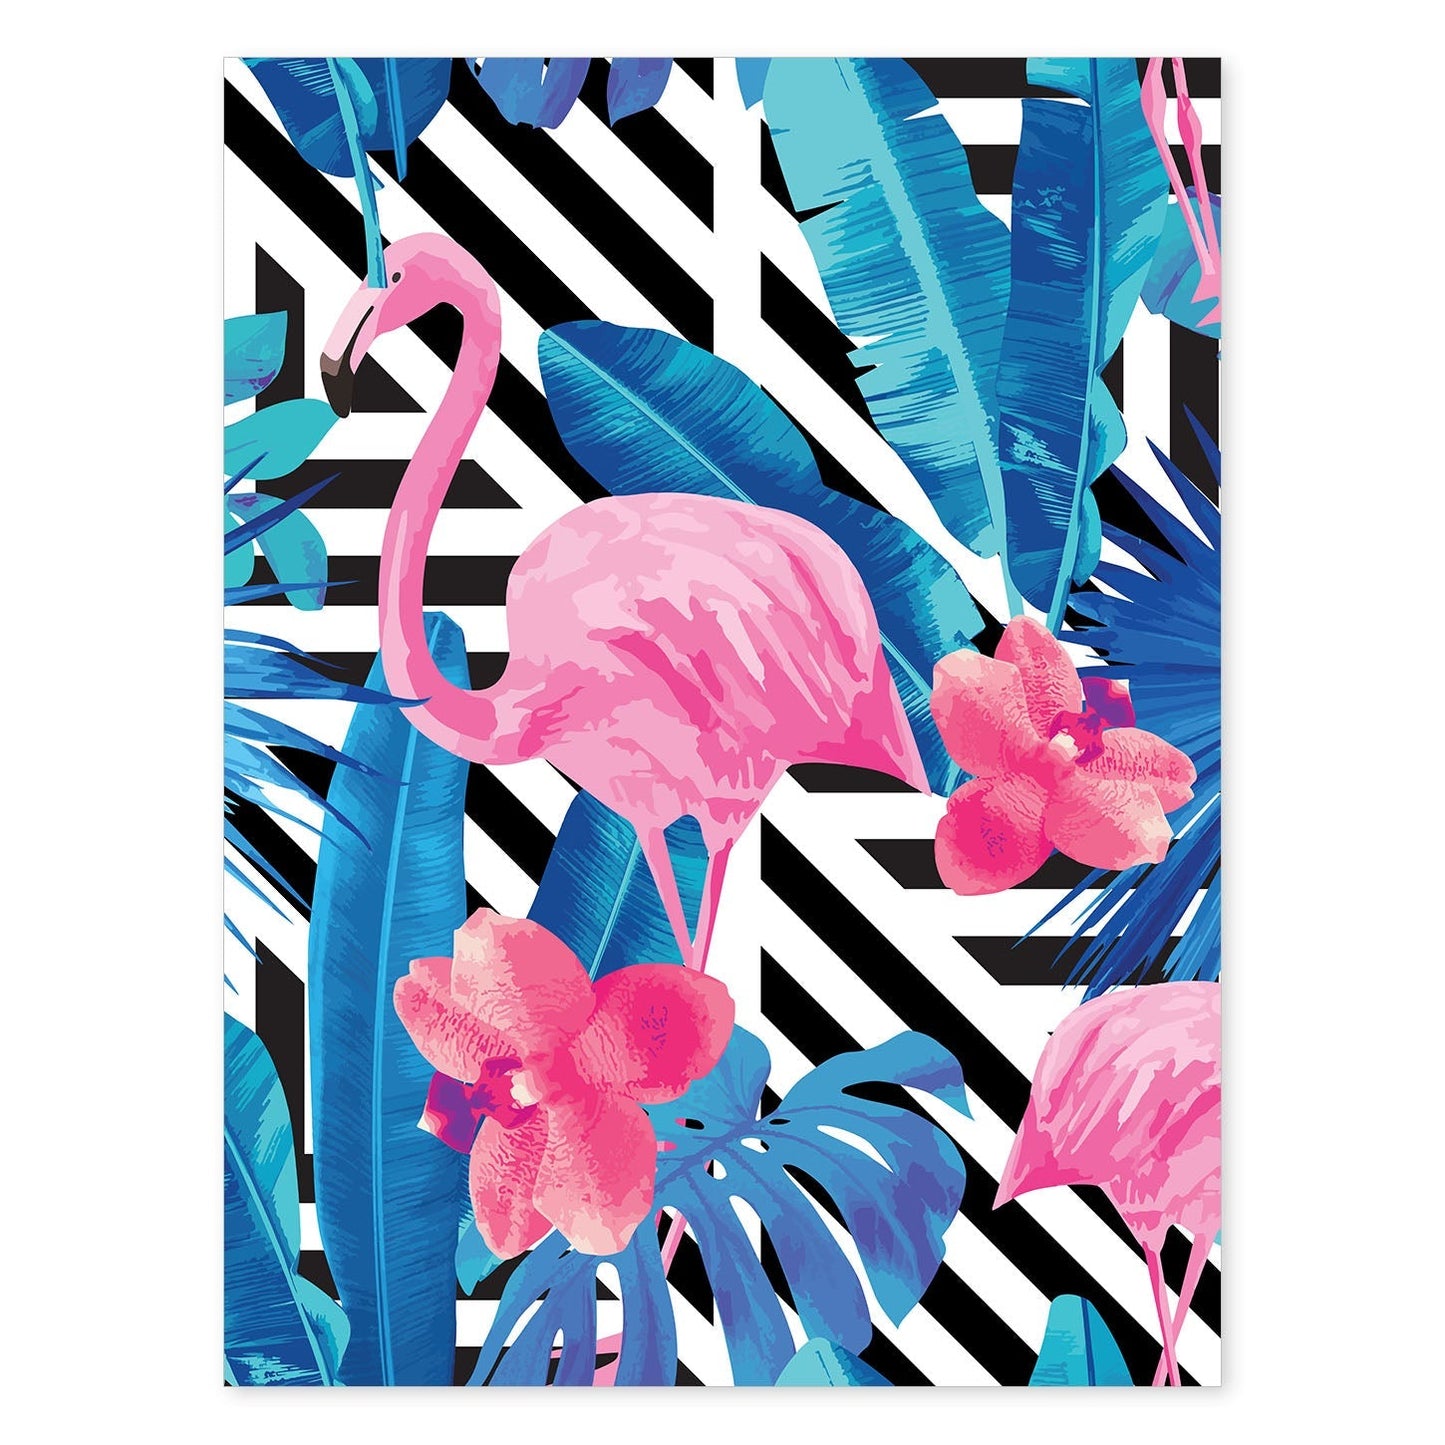 Poster de flamencos. Lámina Flamenco tropical con imágenes de flamencos sobre fondo colorido. Posters de aves con diseño.-Artwork-Nacnic-A4-Sin marco-Nacnic Estudio SL